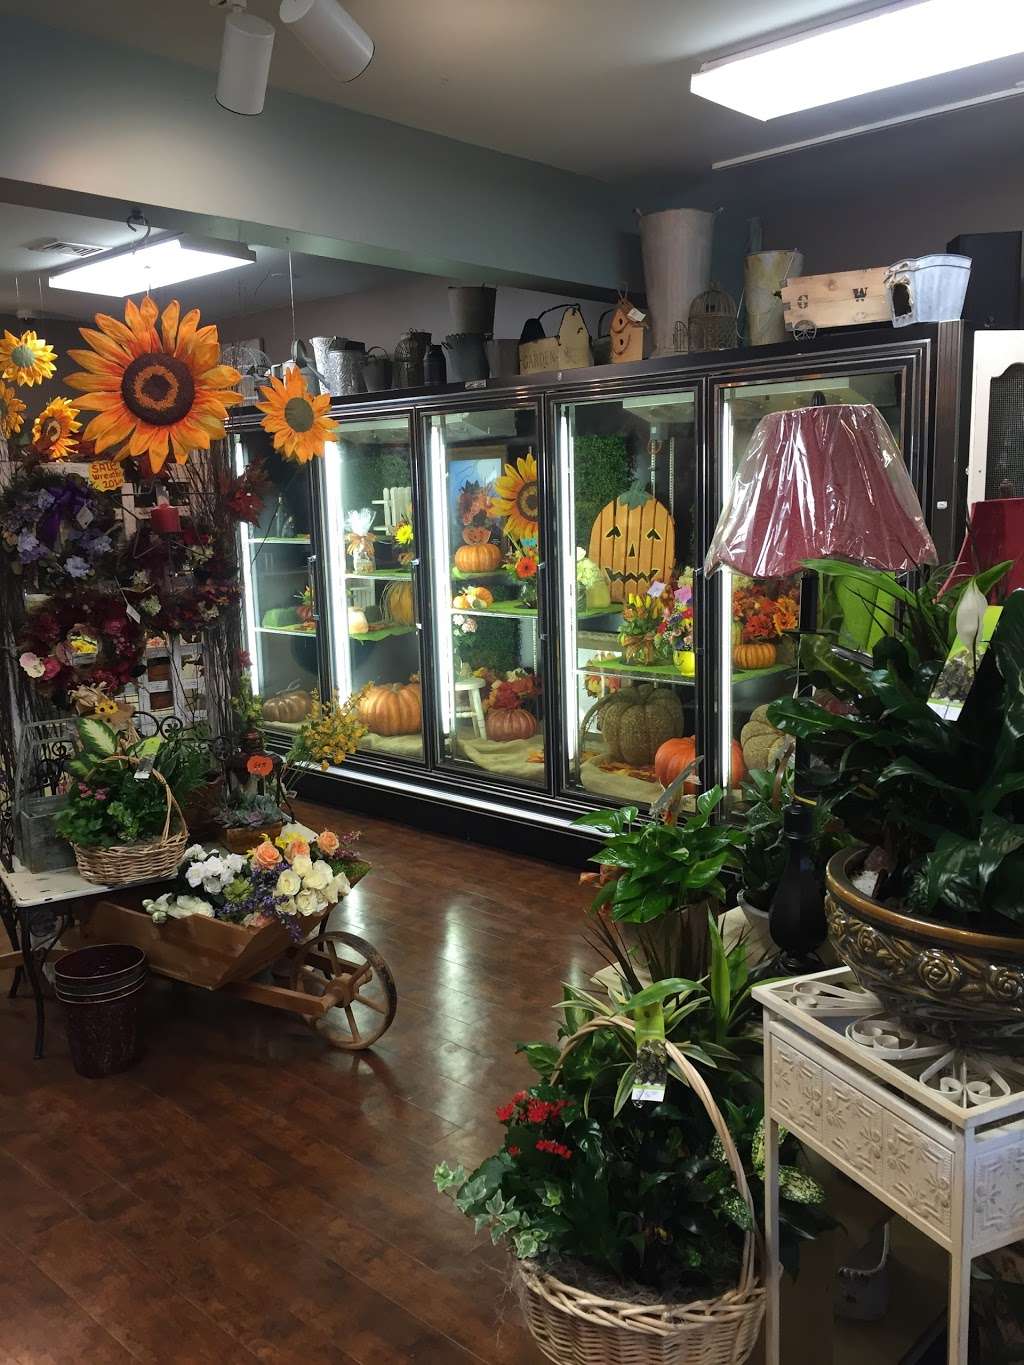 Boslands Flower Shop | 1600 Ratzer Rd, Wayne, NJ 07470 | Phone: (973) 453-0033